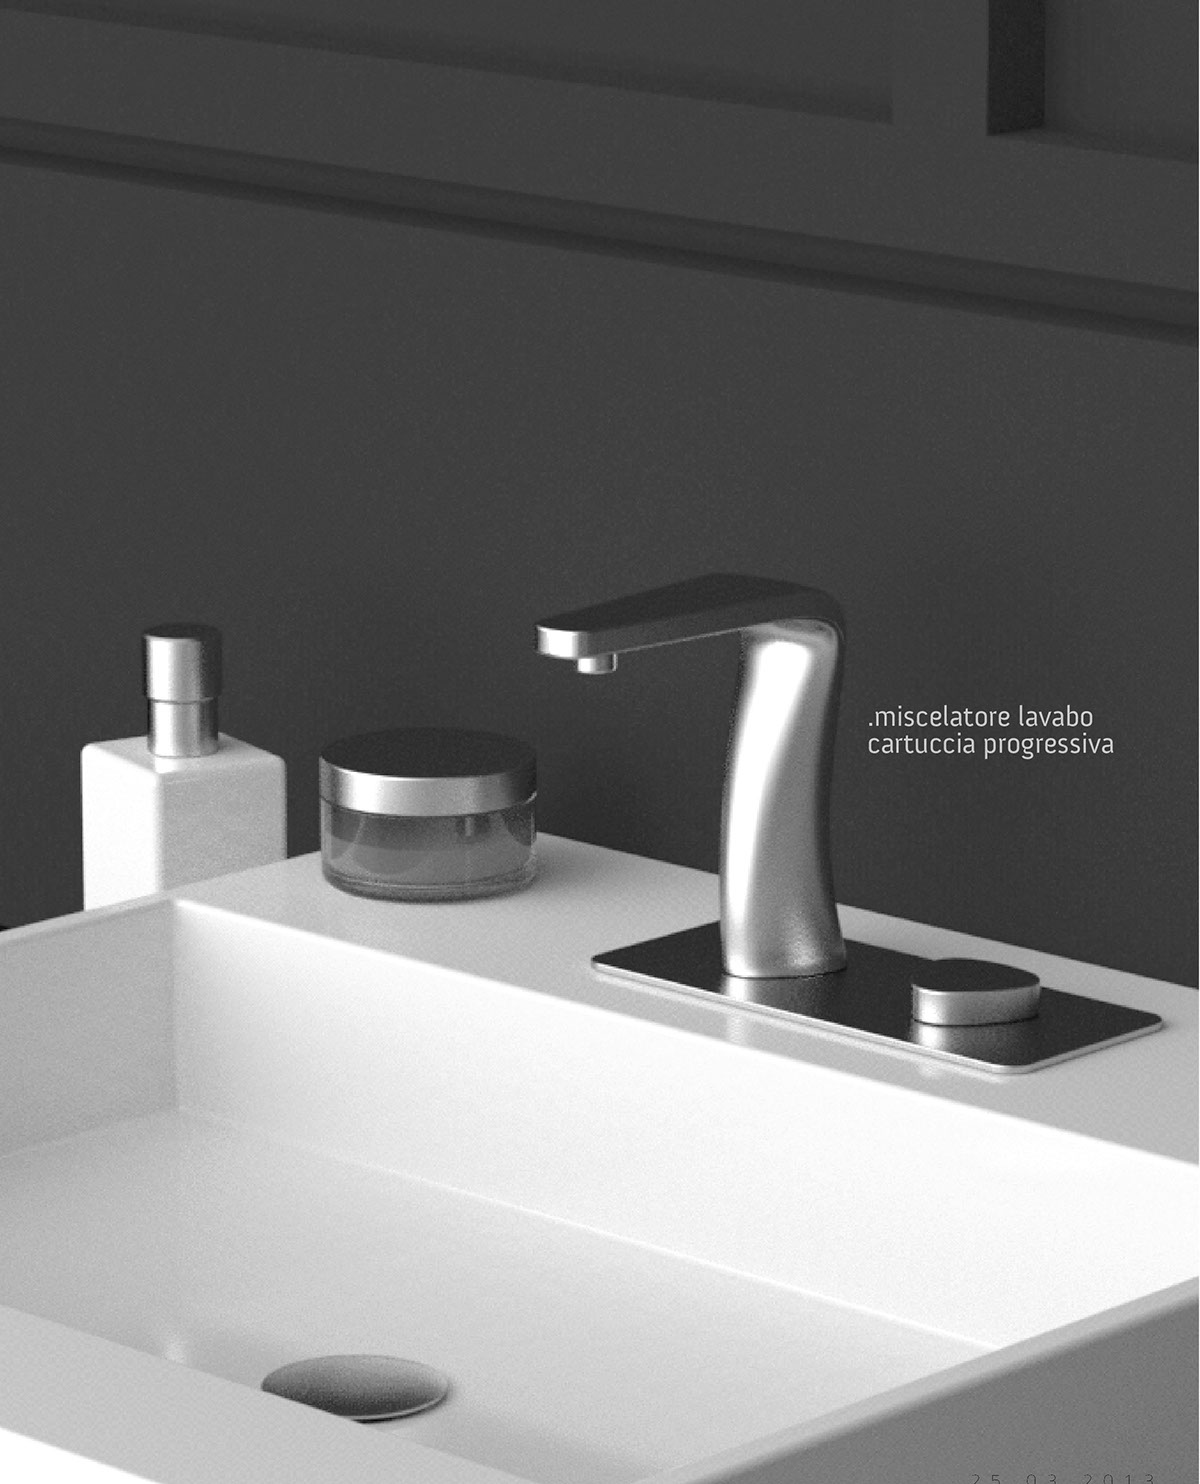 Faucet  bathroom  Hiro Chandra water tap  modern contemporary  twist  Water Twist  design  accessories